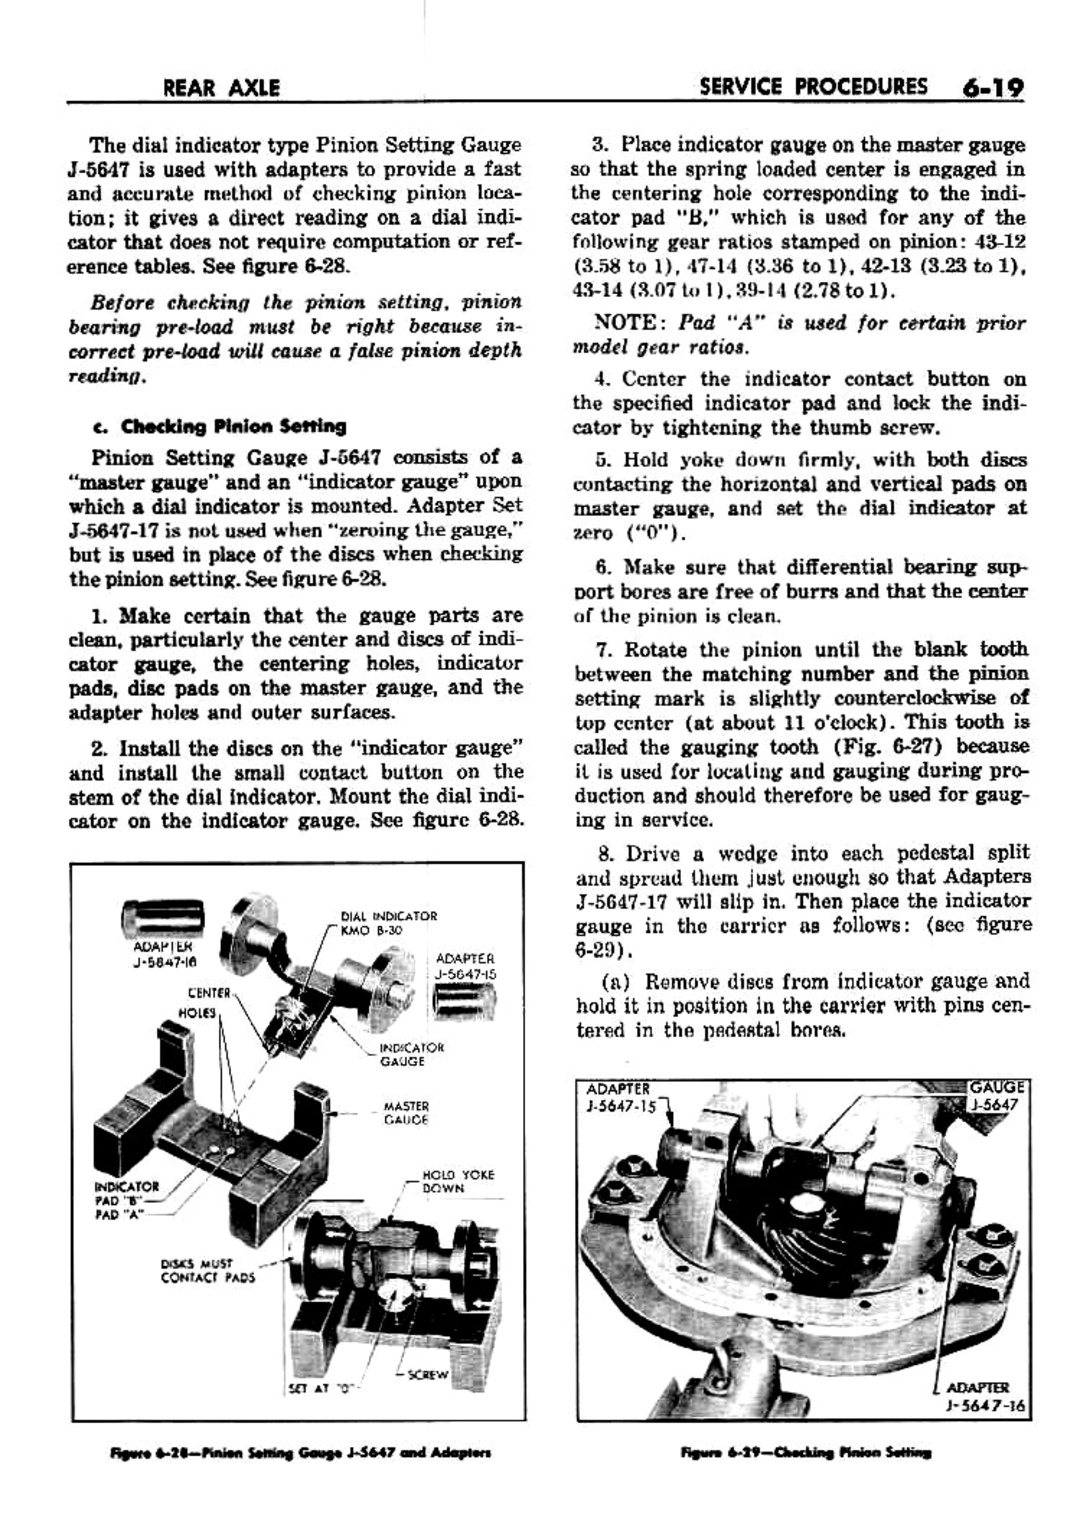 n_07 1959 Buick Shop Manual - Rear Axle-019-019.jpg